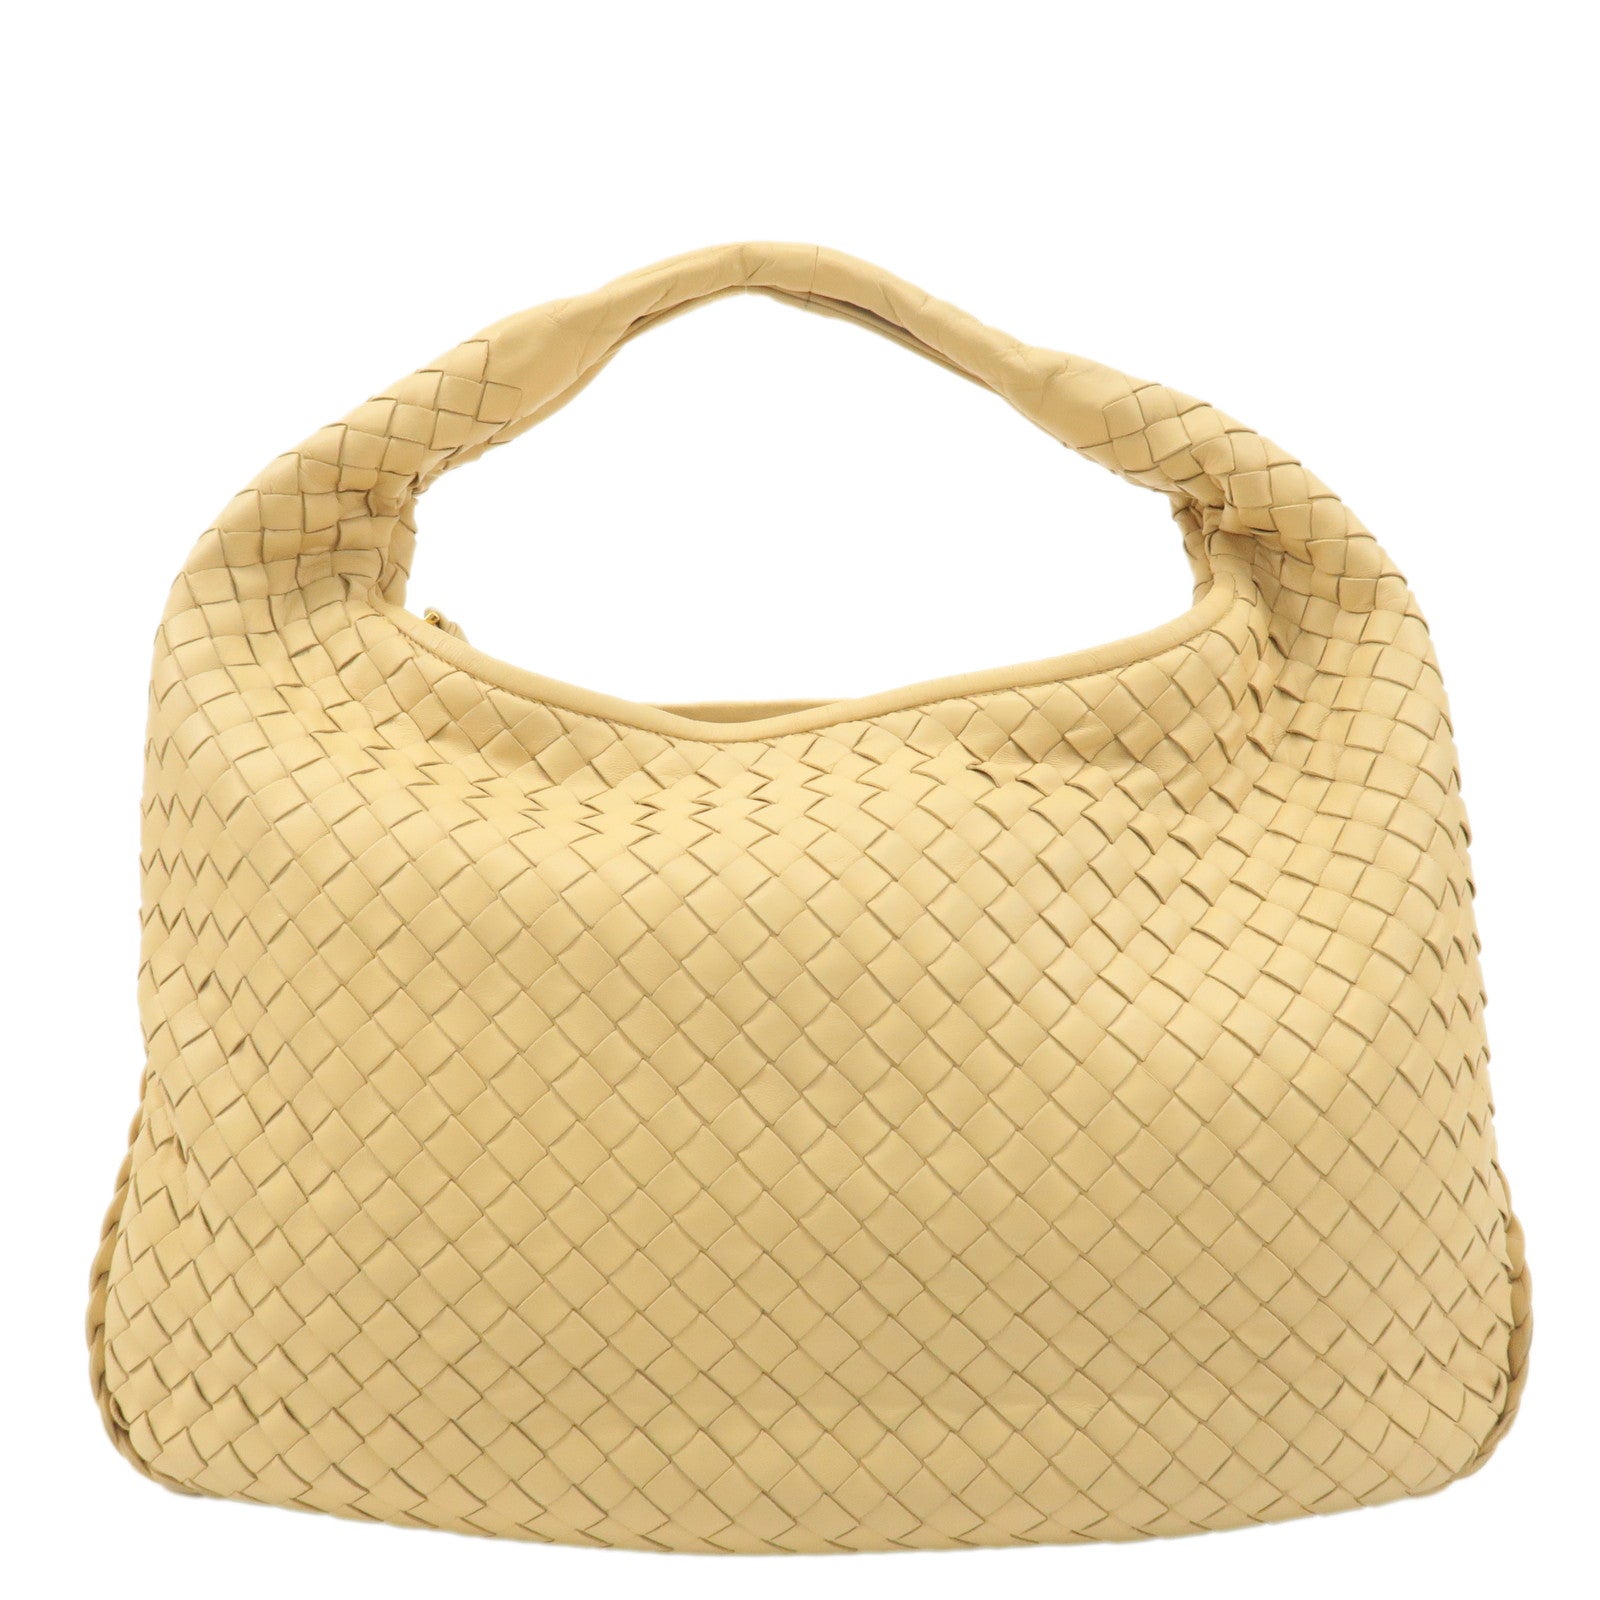 BOTTEGA-VENETA-Hobo-Intrecciato-Leather-Shoulder-Bag-Cream-115653